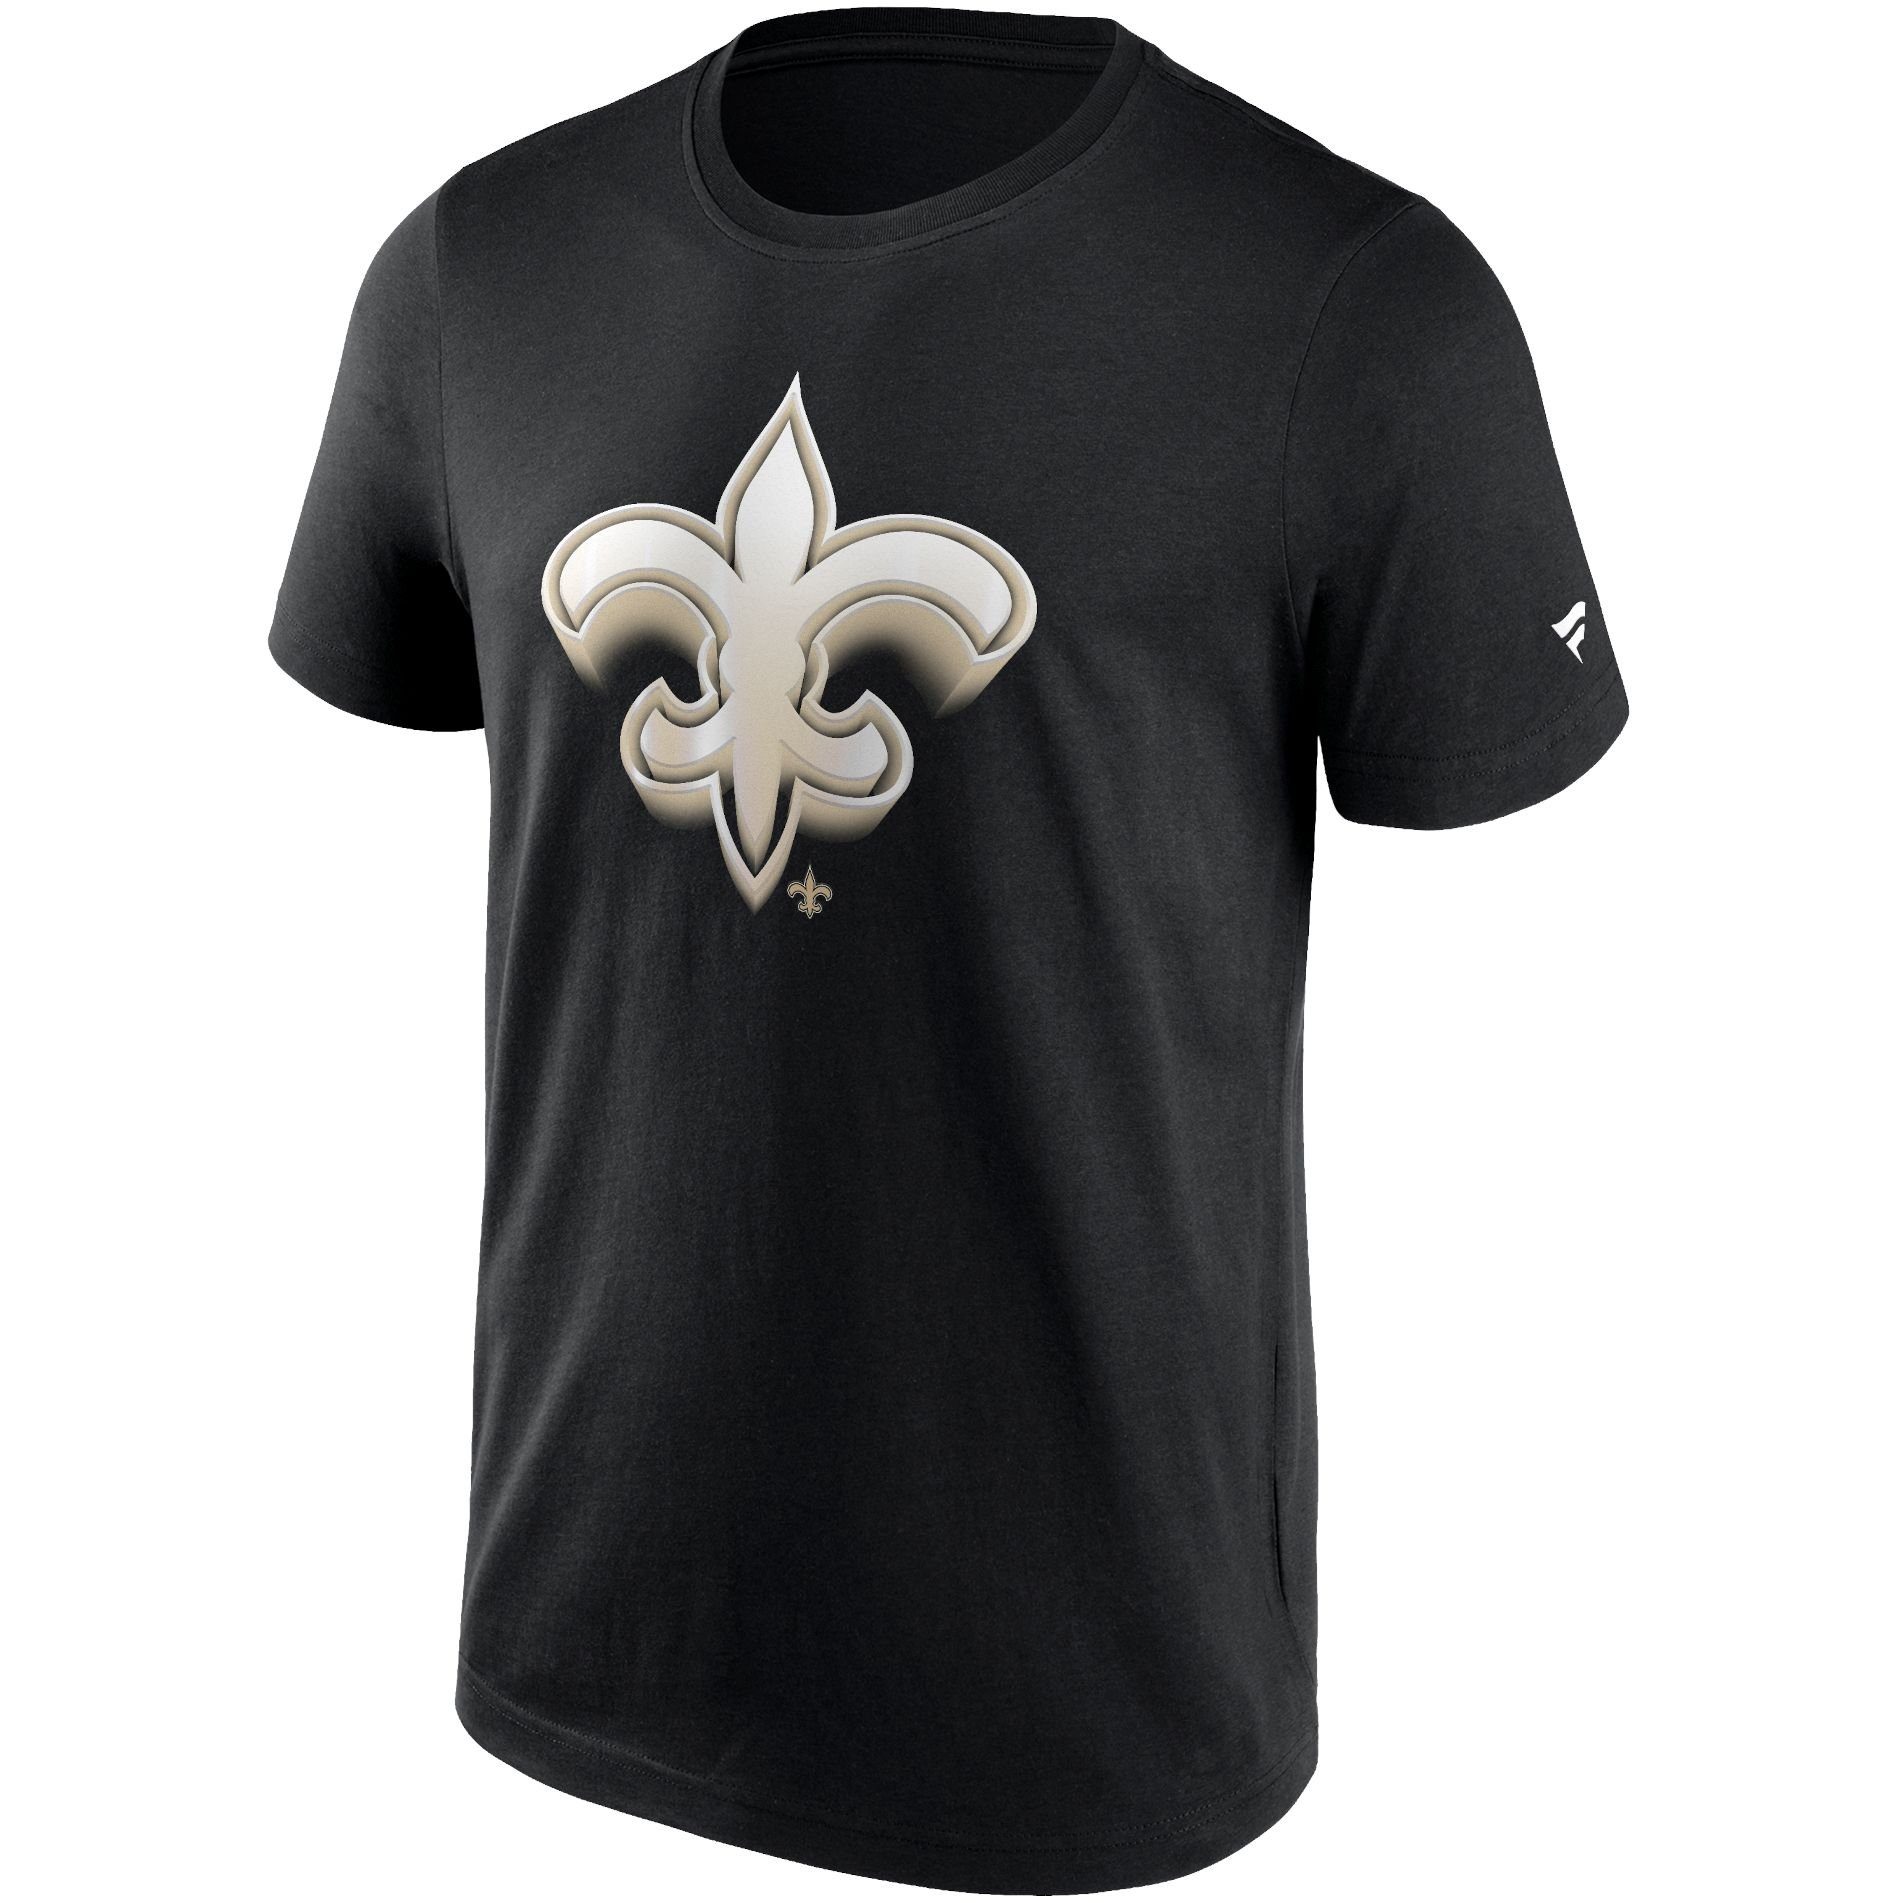 Print-Shirt NFL LOGO New NHL Fanatics MLB CHROME Saints Teams Orleans